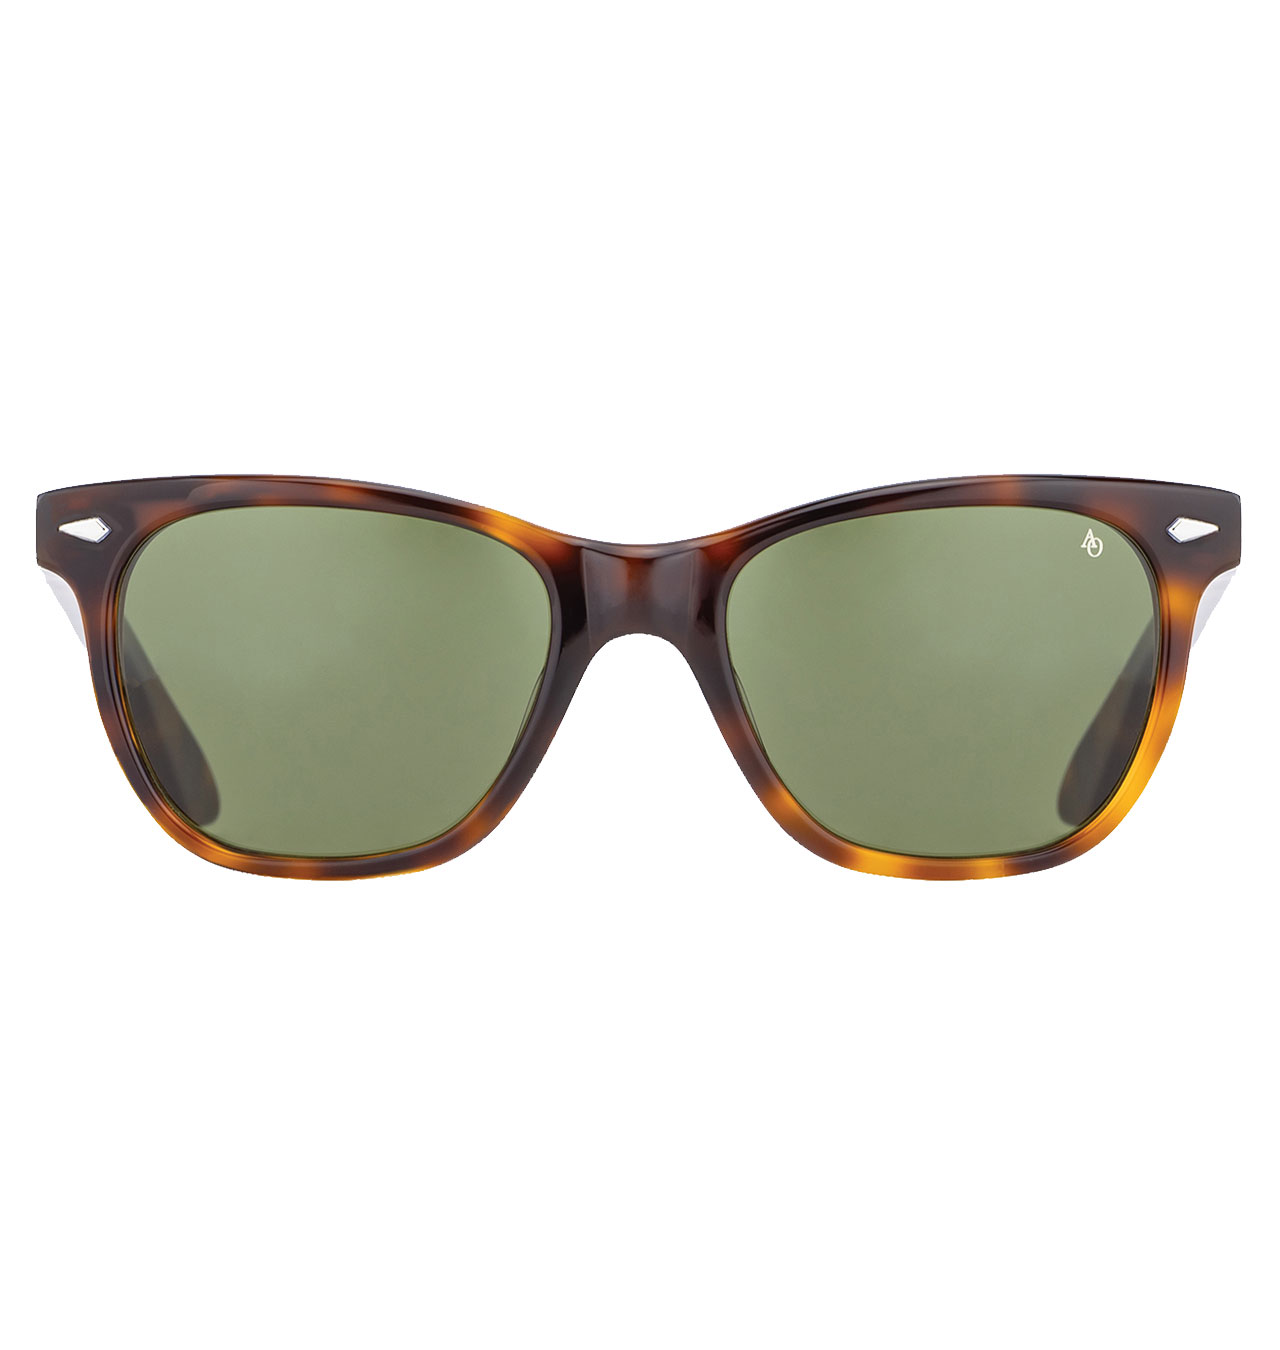 American-Optical---Saratoga-Sunglasses-Tortoise-1